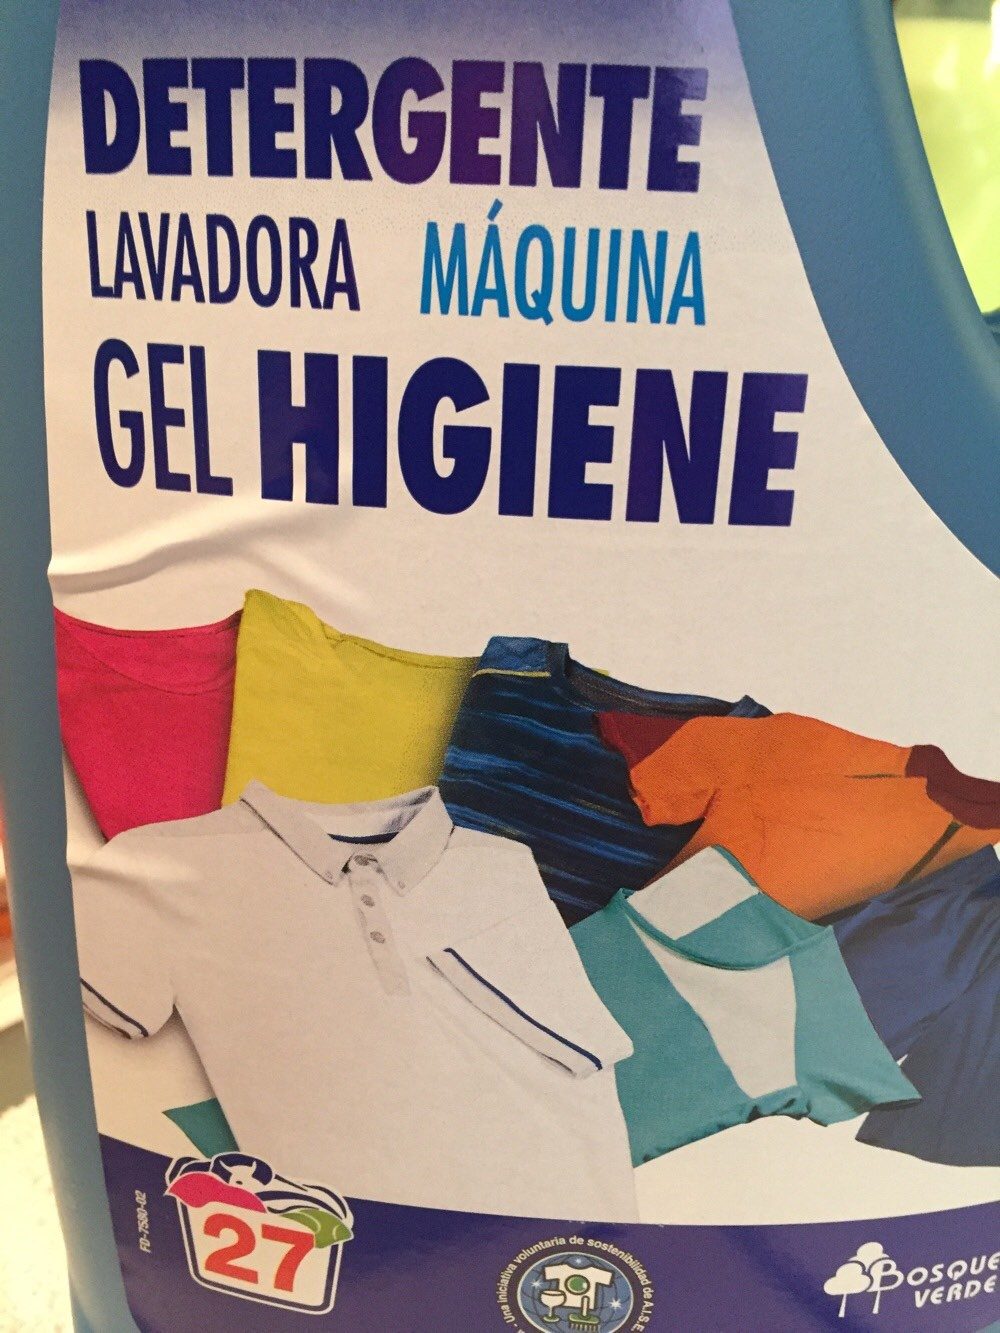 Detergente higiene - Product - de